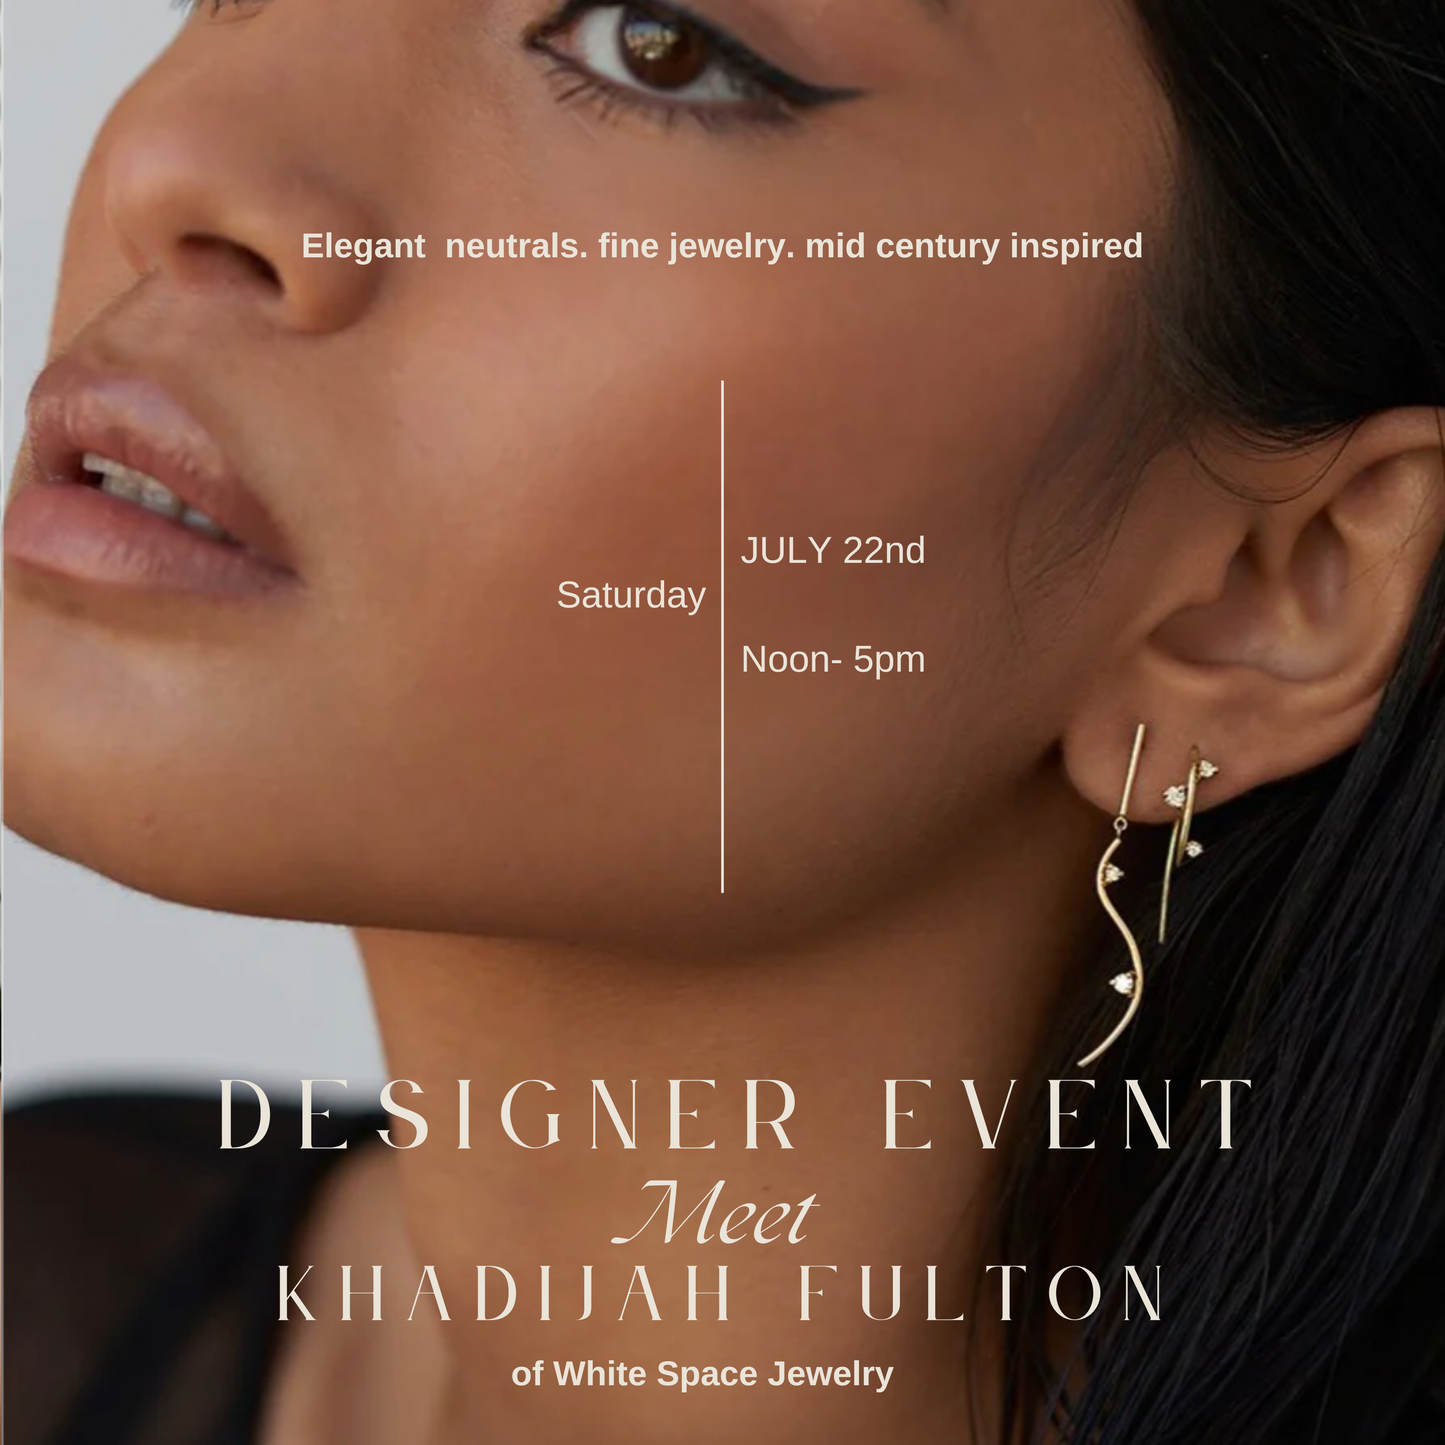 DESIGNER EVENT: Khadijah Fulton